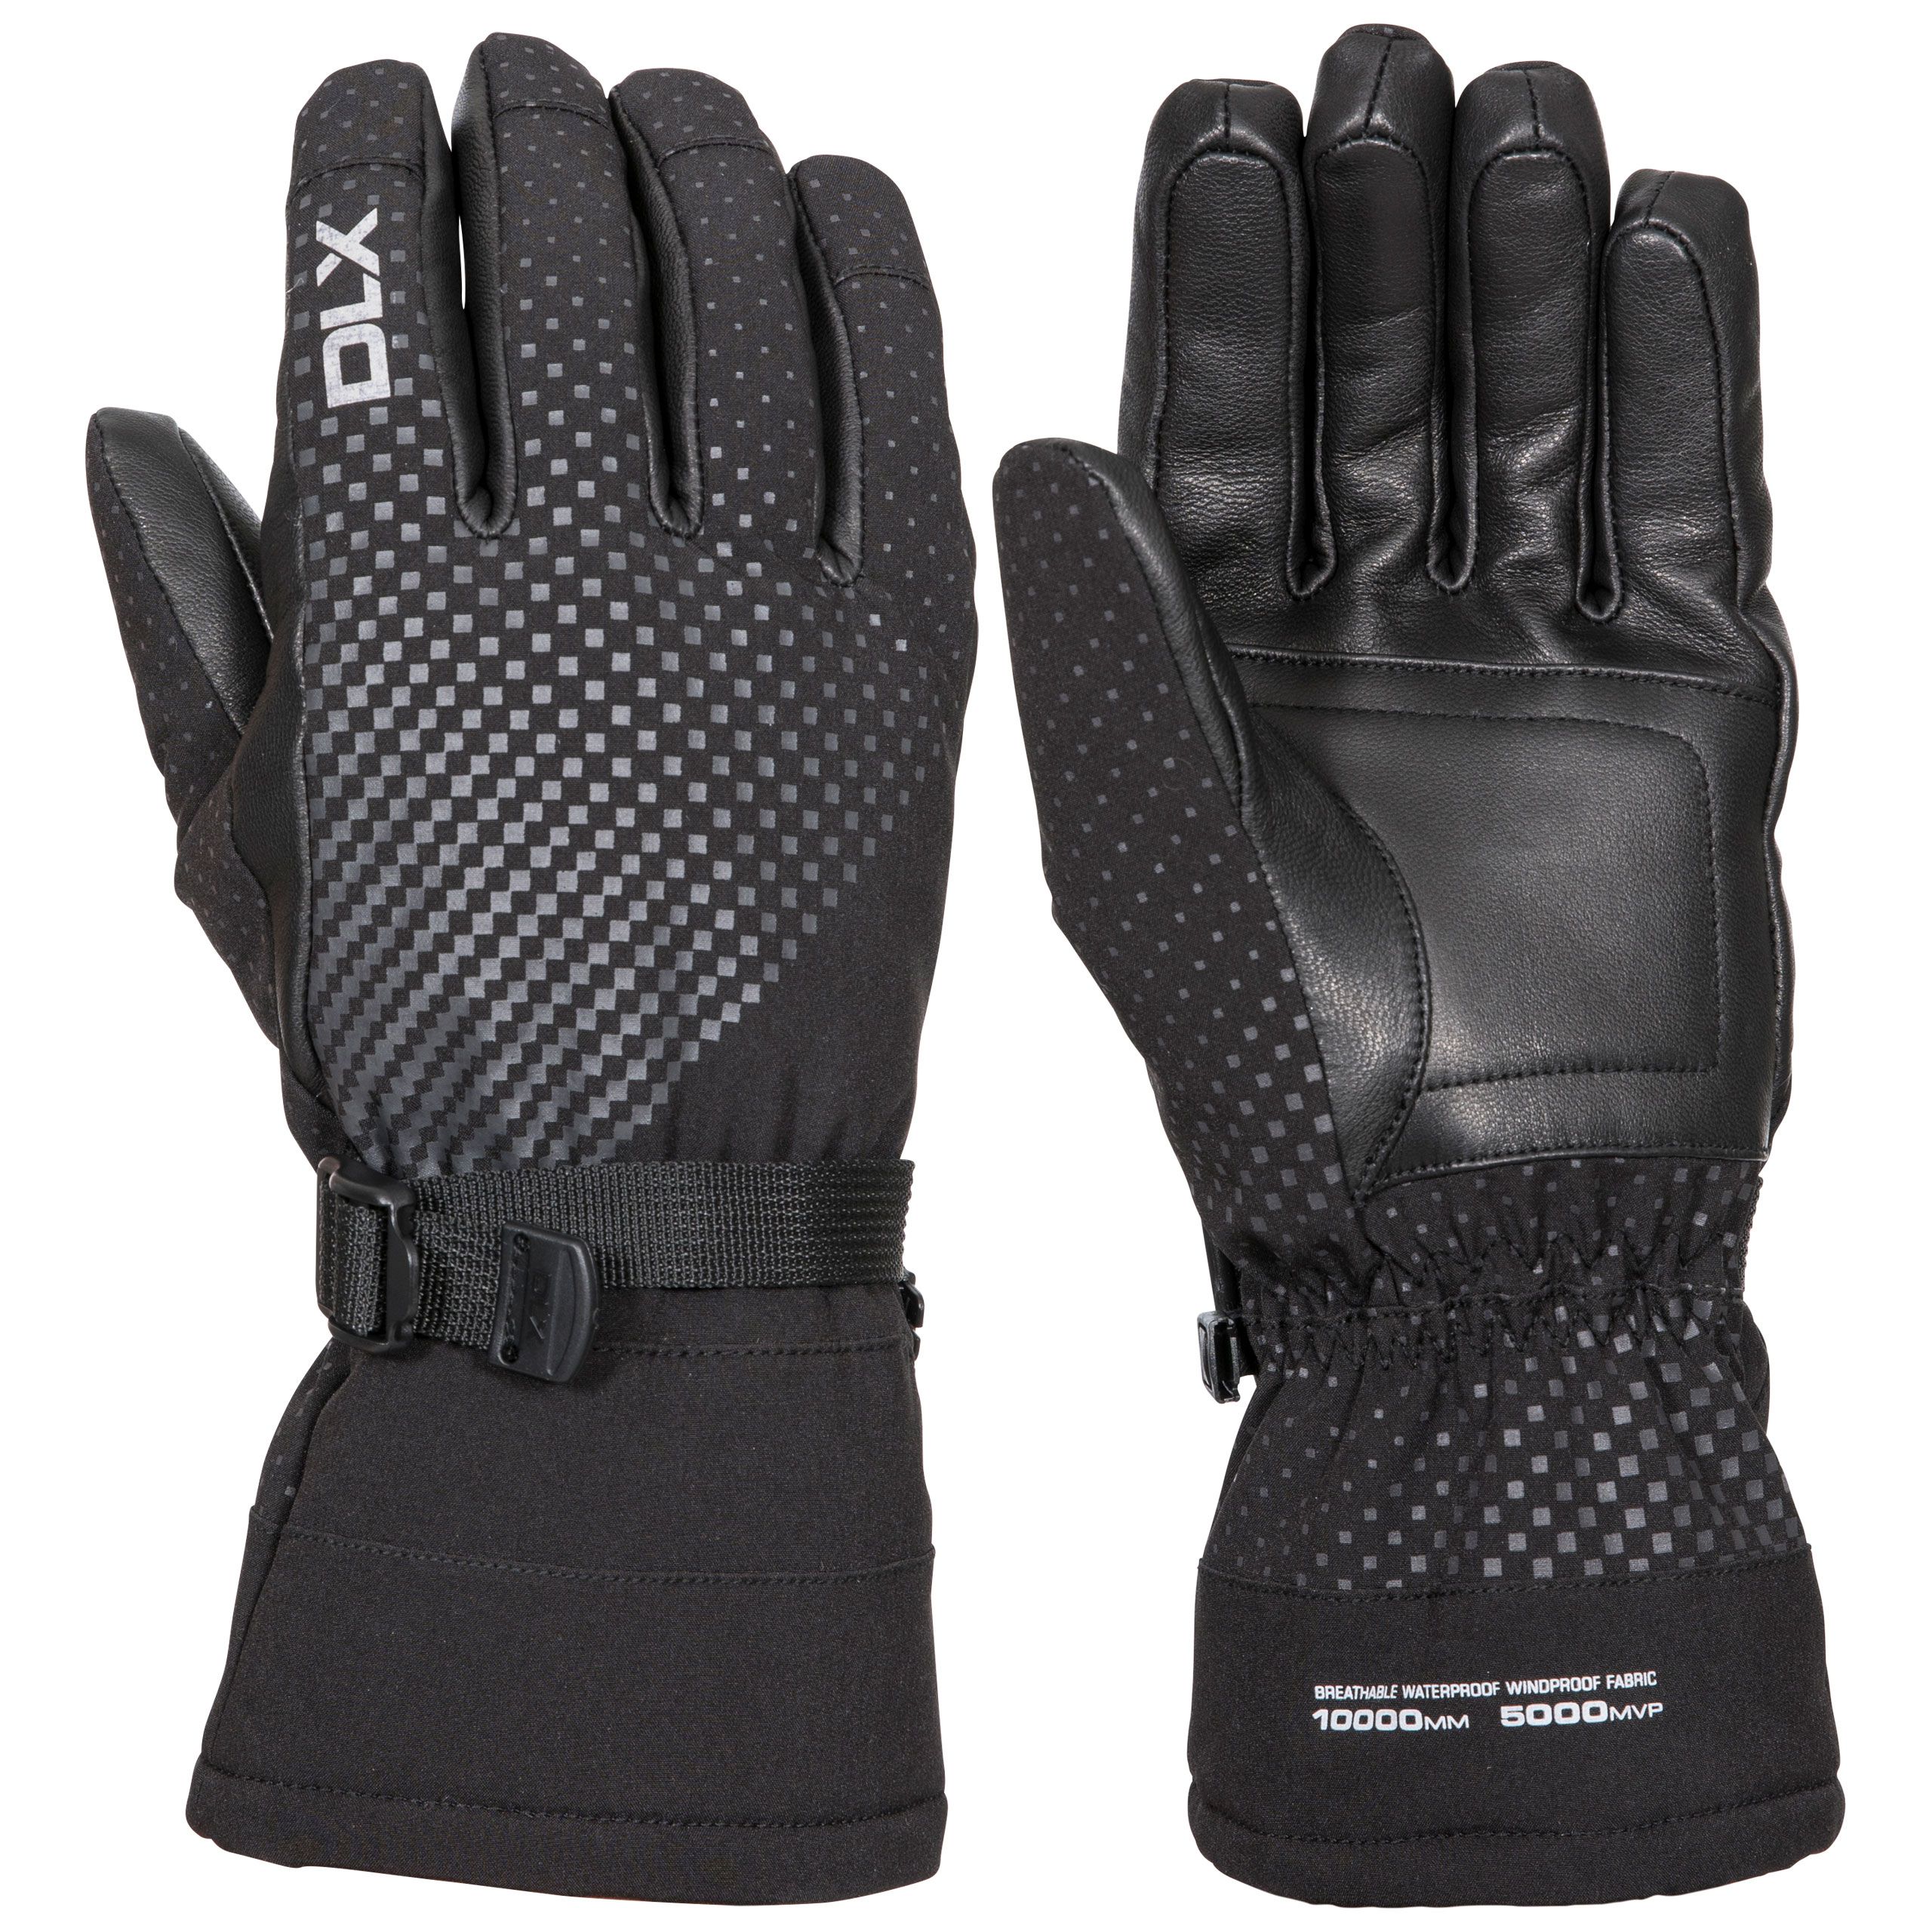 Alazo Adults Dlx High Performance Ski Gloves